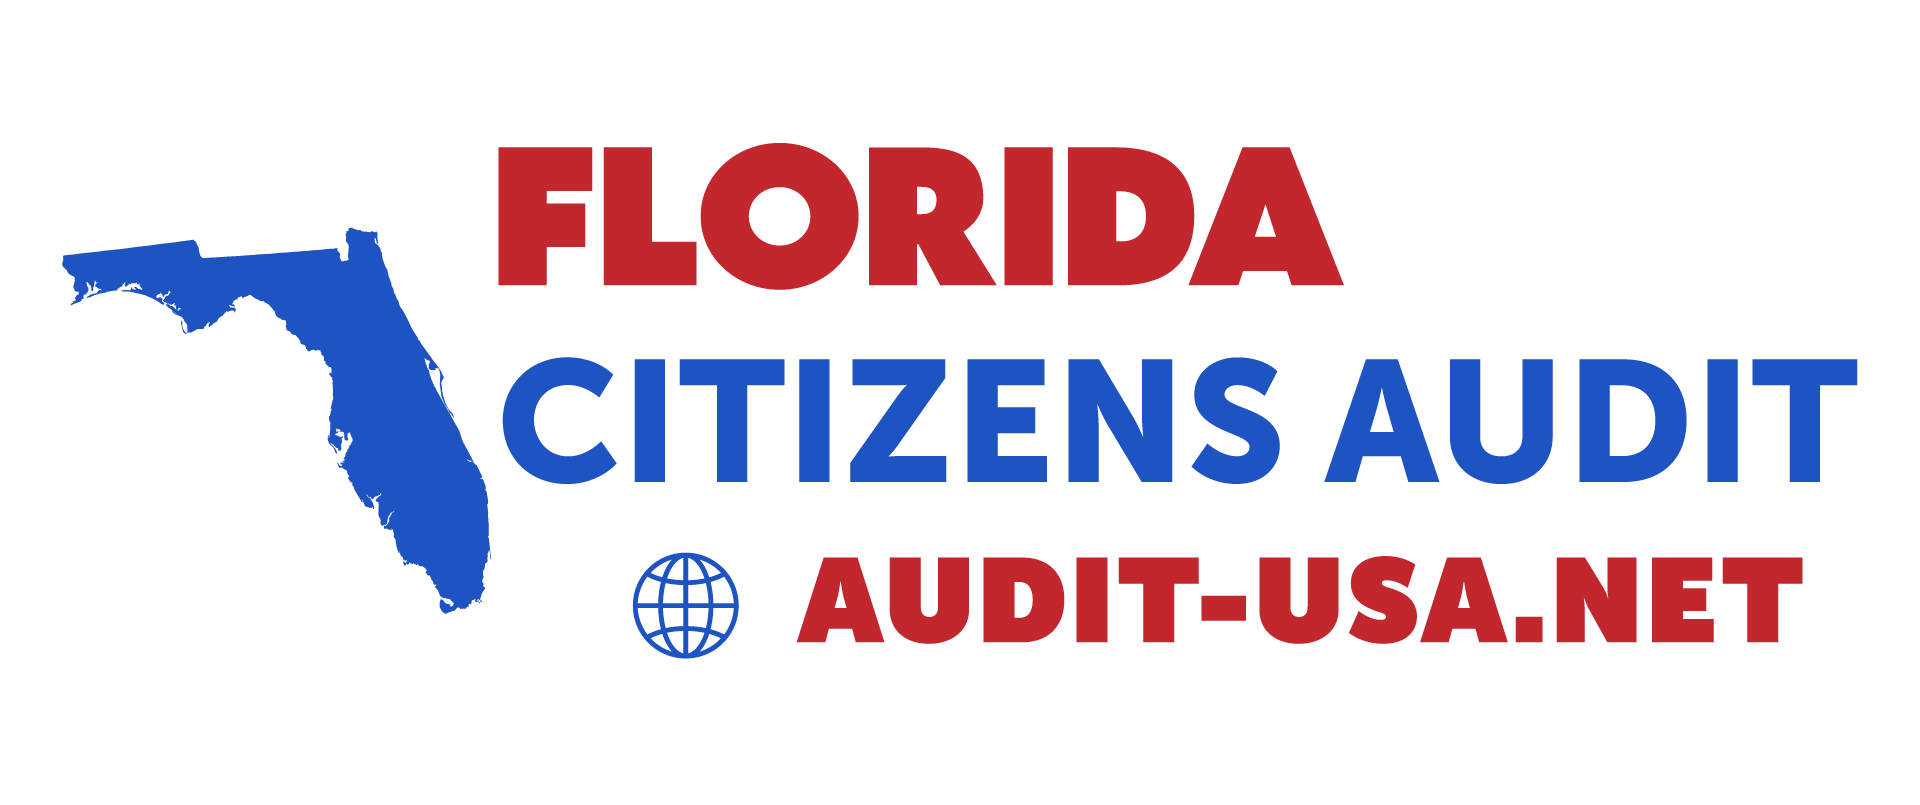 Florida Citizens Audit